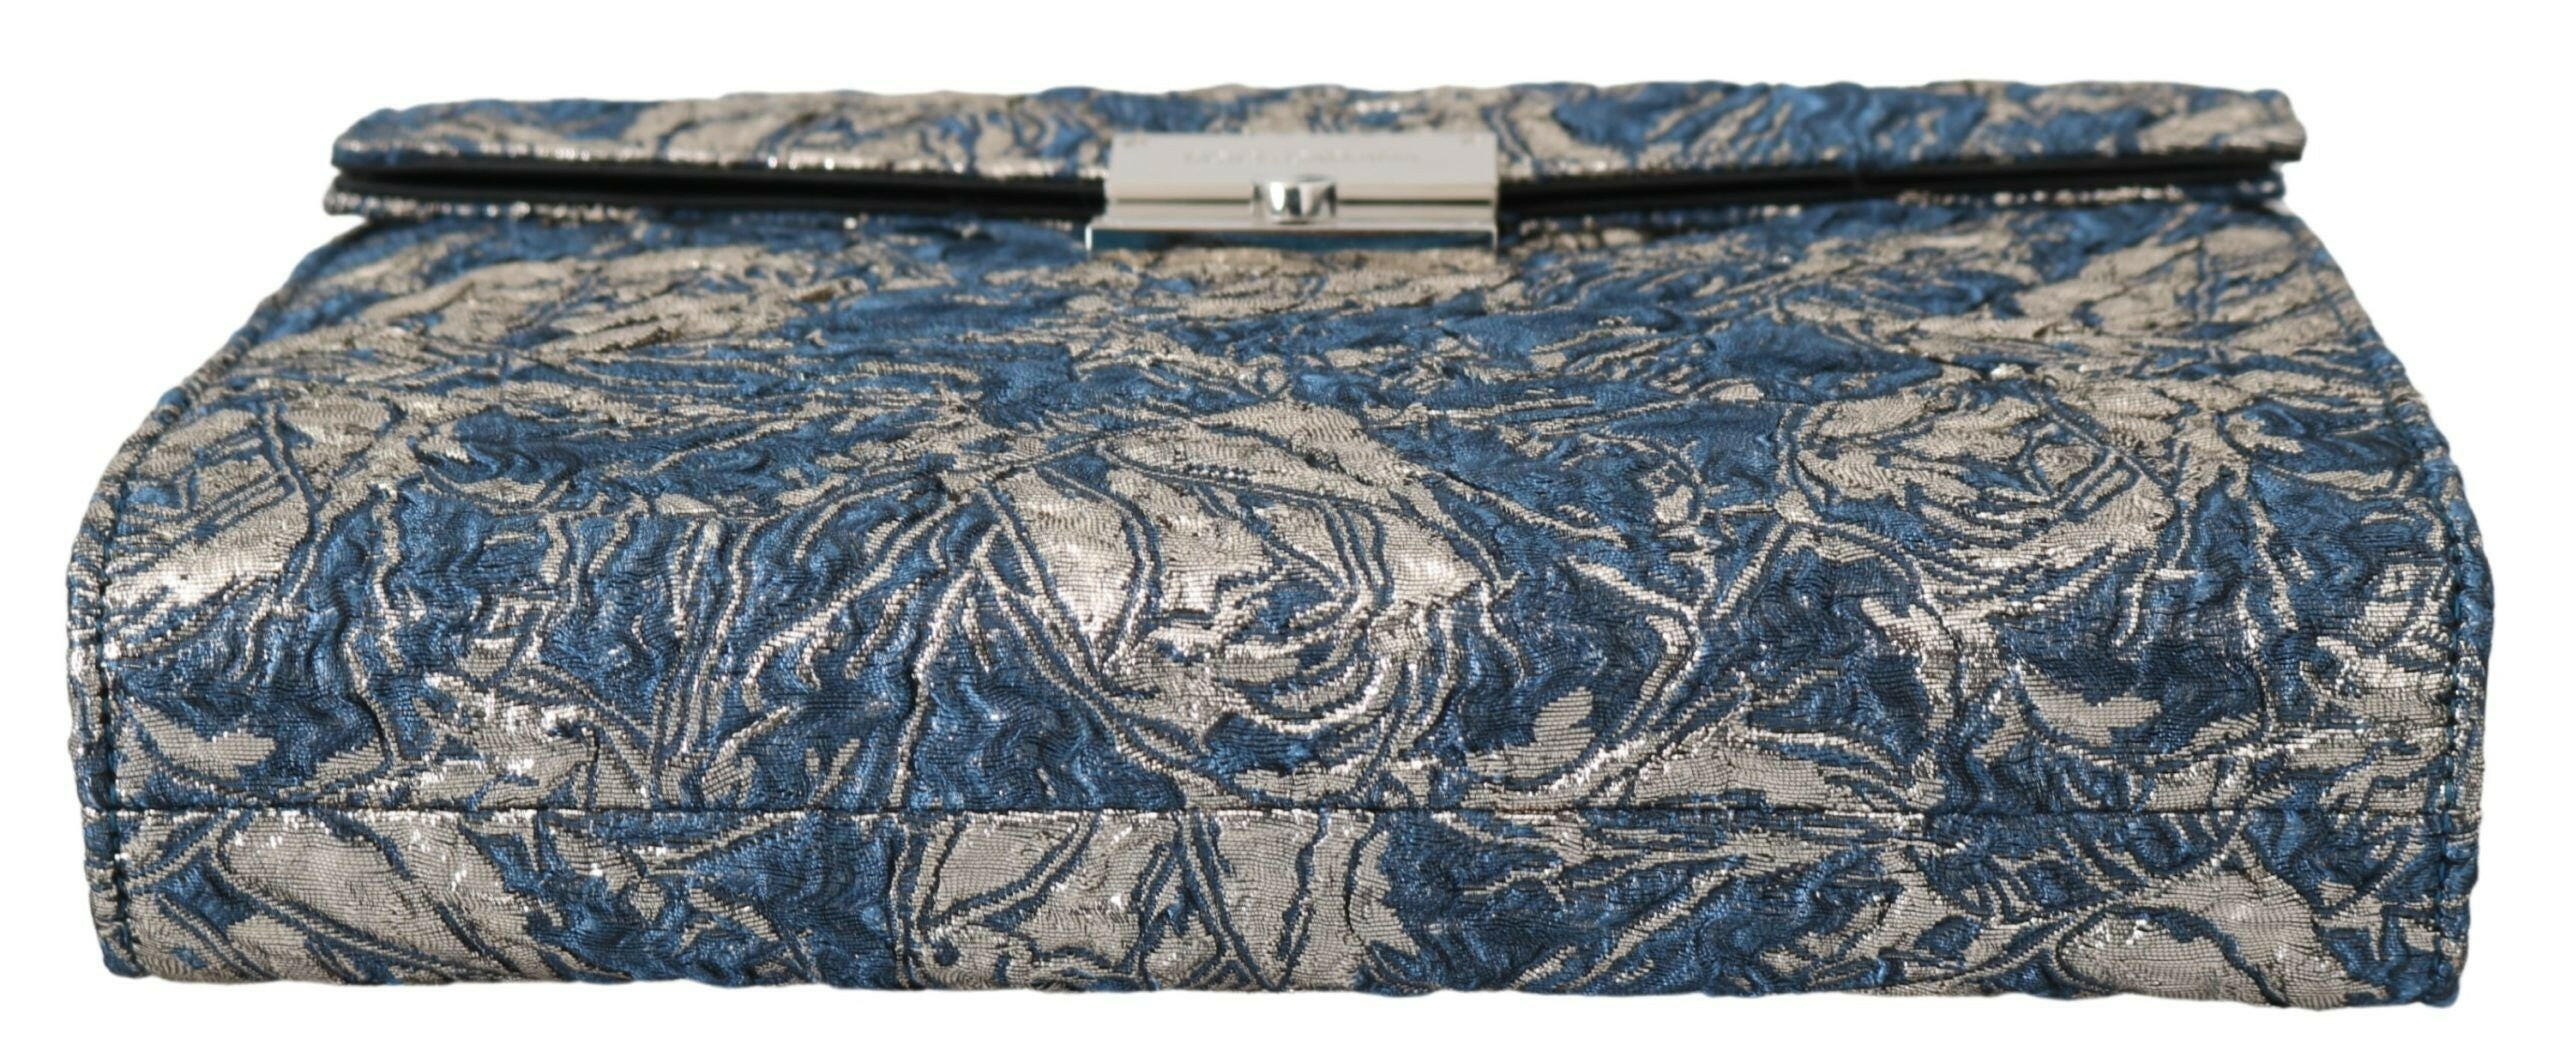 Dolce & Gabbana Blue Silver Jacquard Leather Document Briefcase Bag - GENUINE AUTHENTIC BRAND LLC  